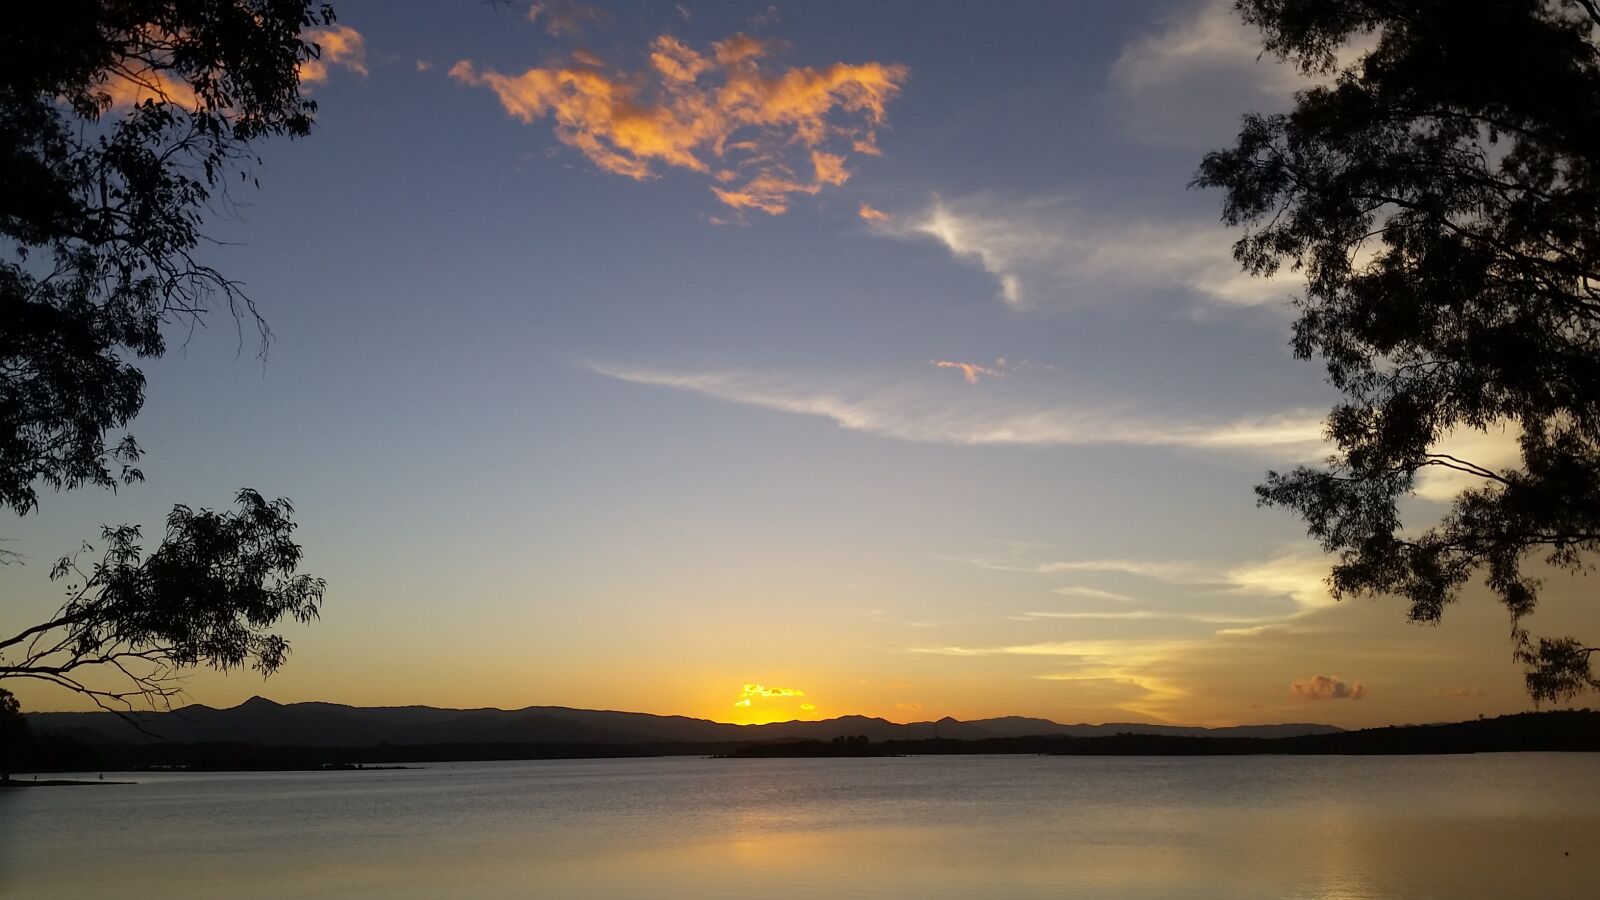 Samsung Galaxy S5 sample photo. Sunset, lake, cloud photography